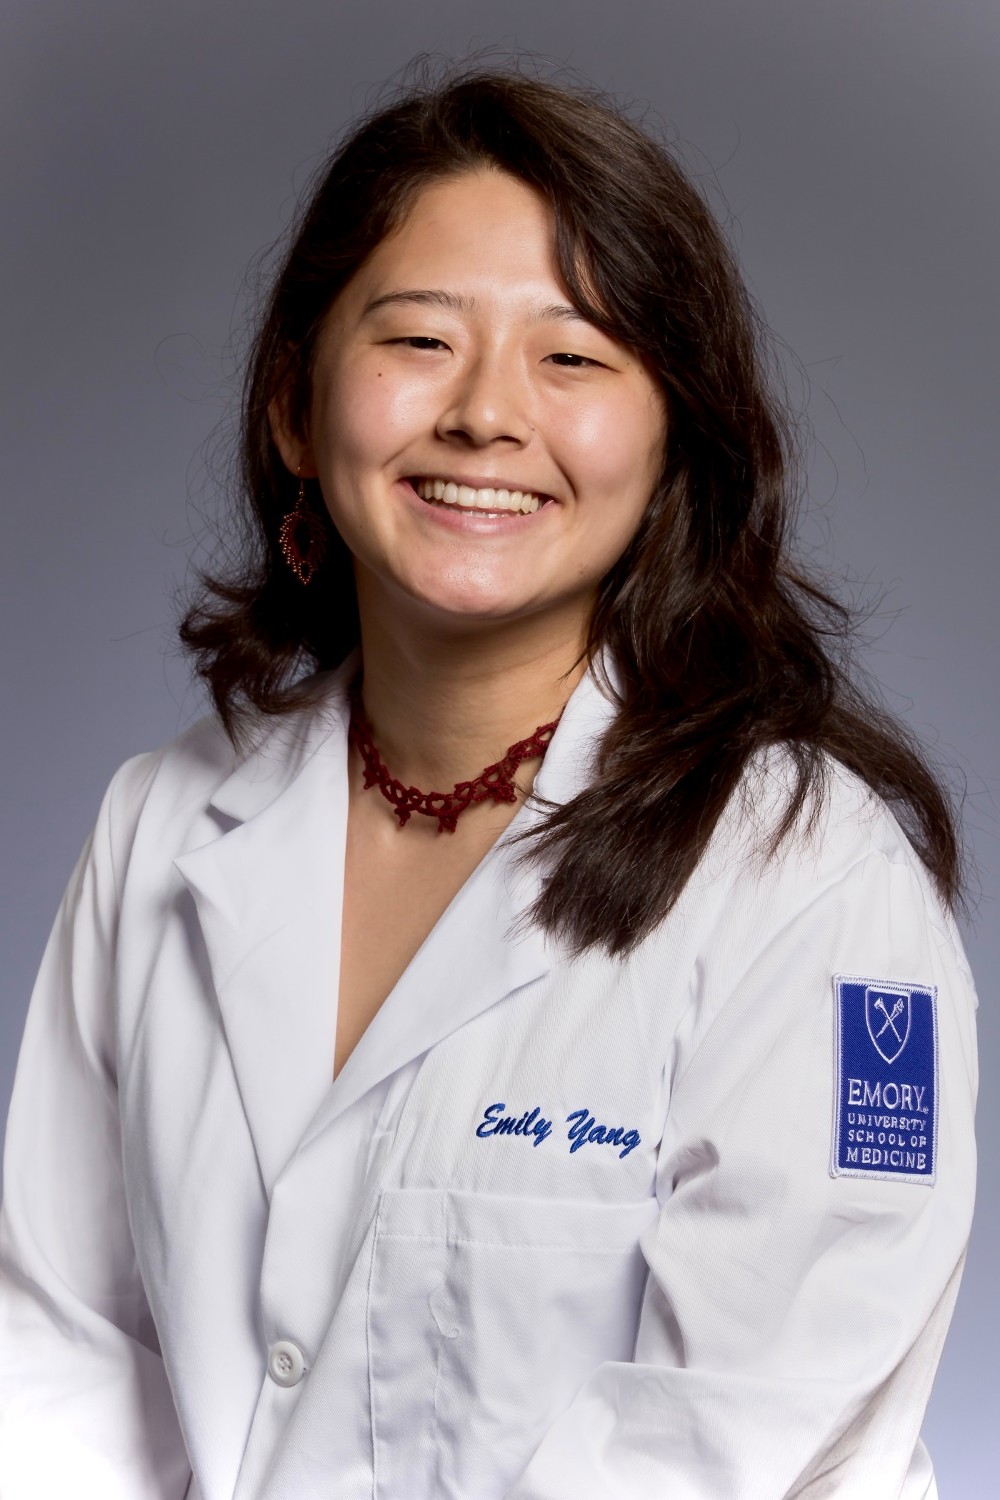 Dr. Emily Yang